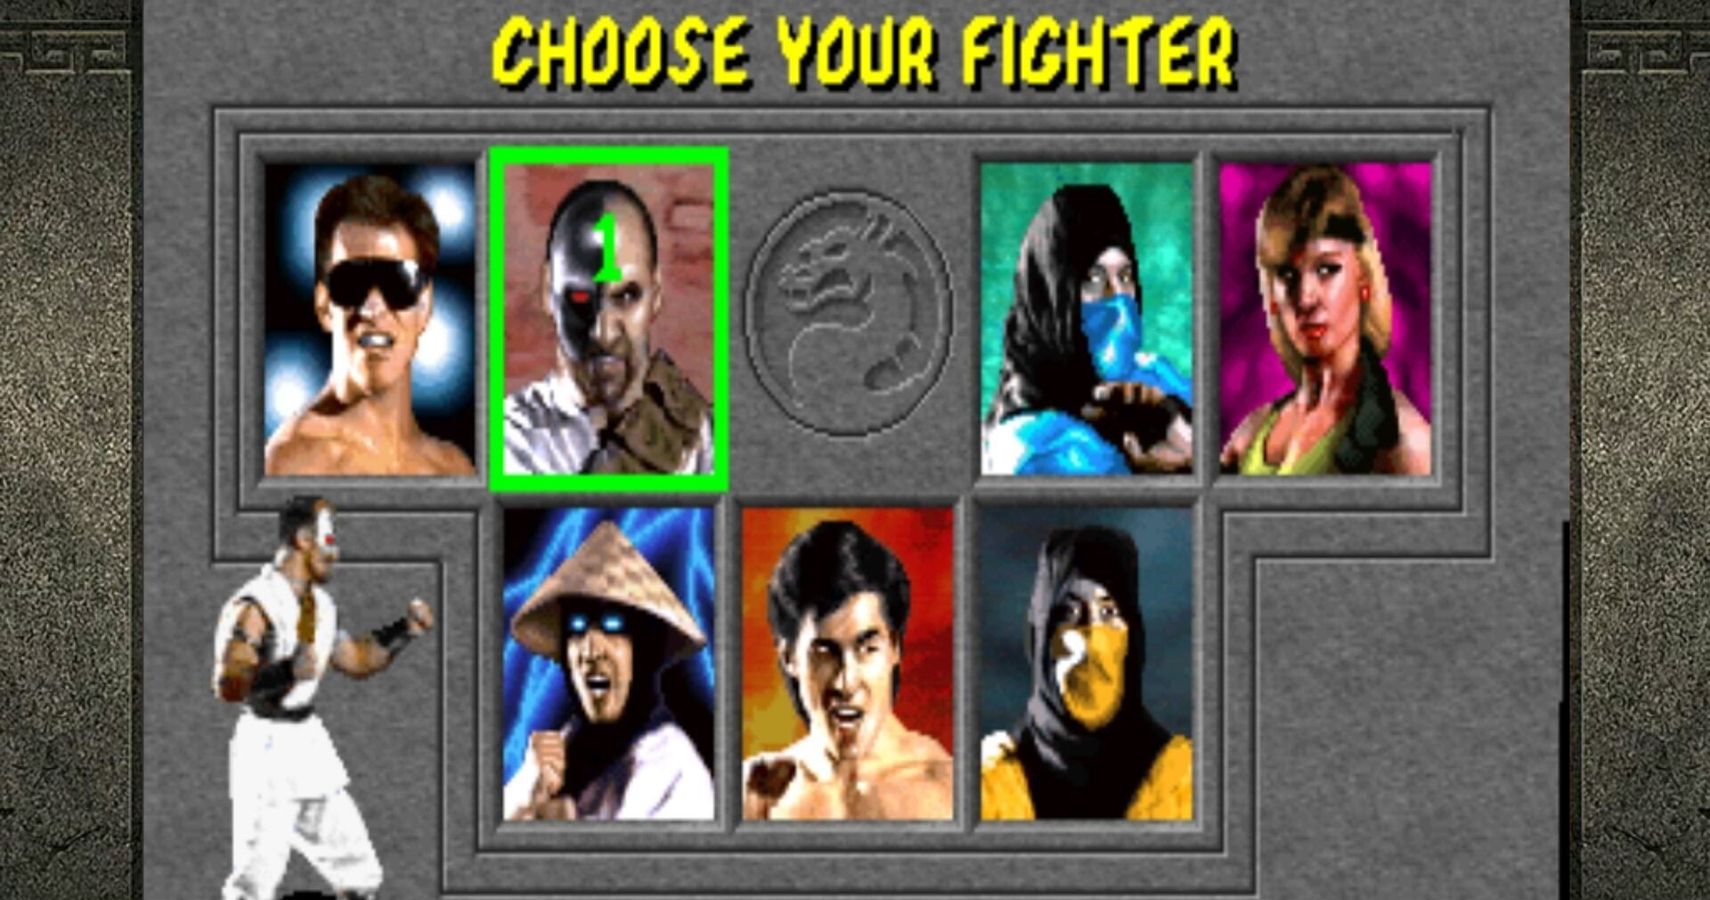 Mortal Kombat Timeline: The Complete Story Explained